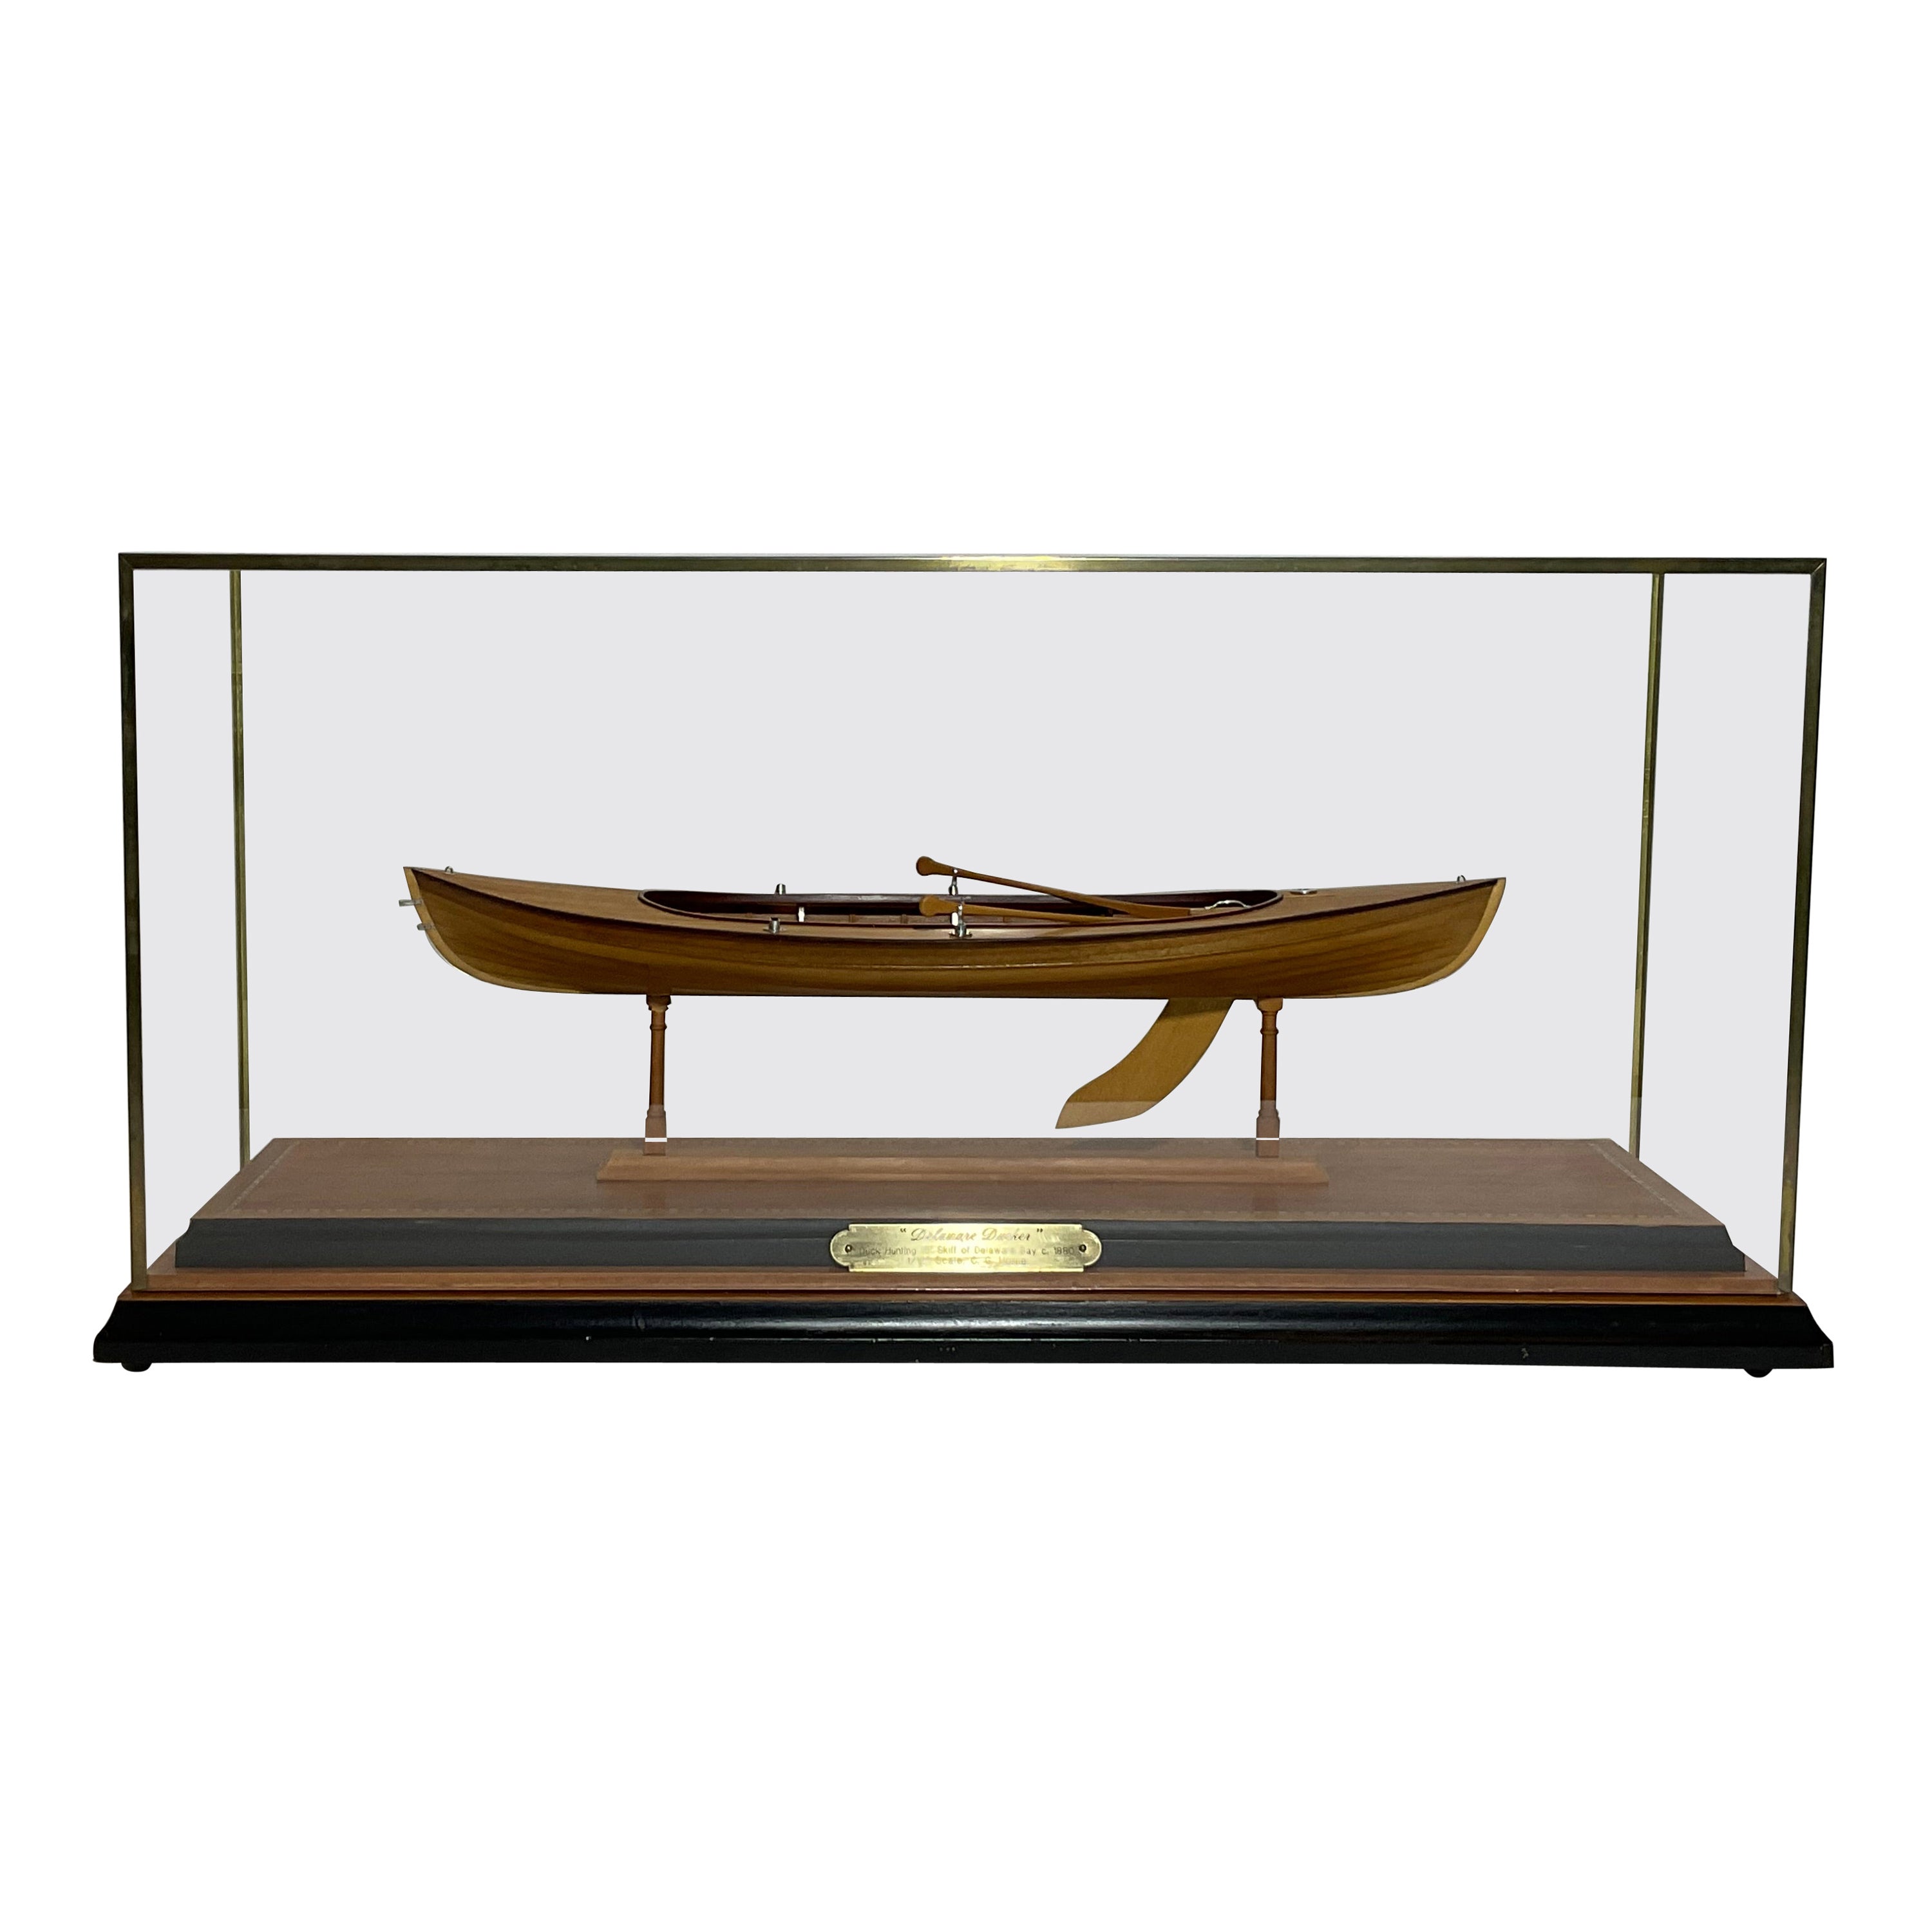 Delaware Ducker Planked Model in Case For Sale